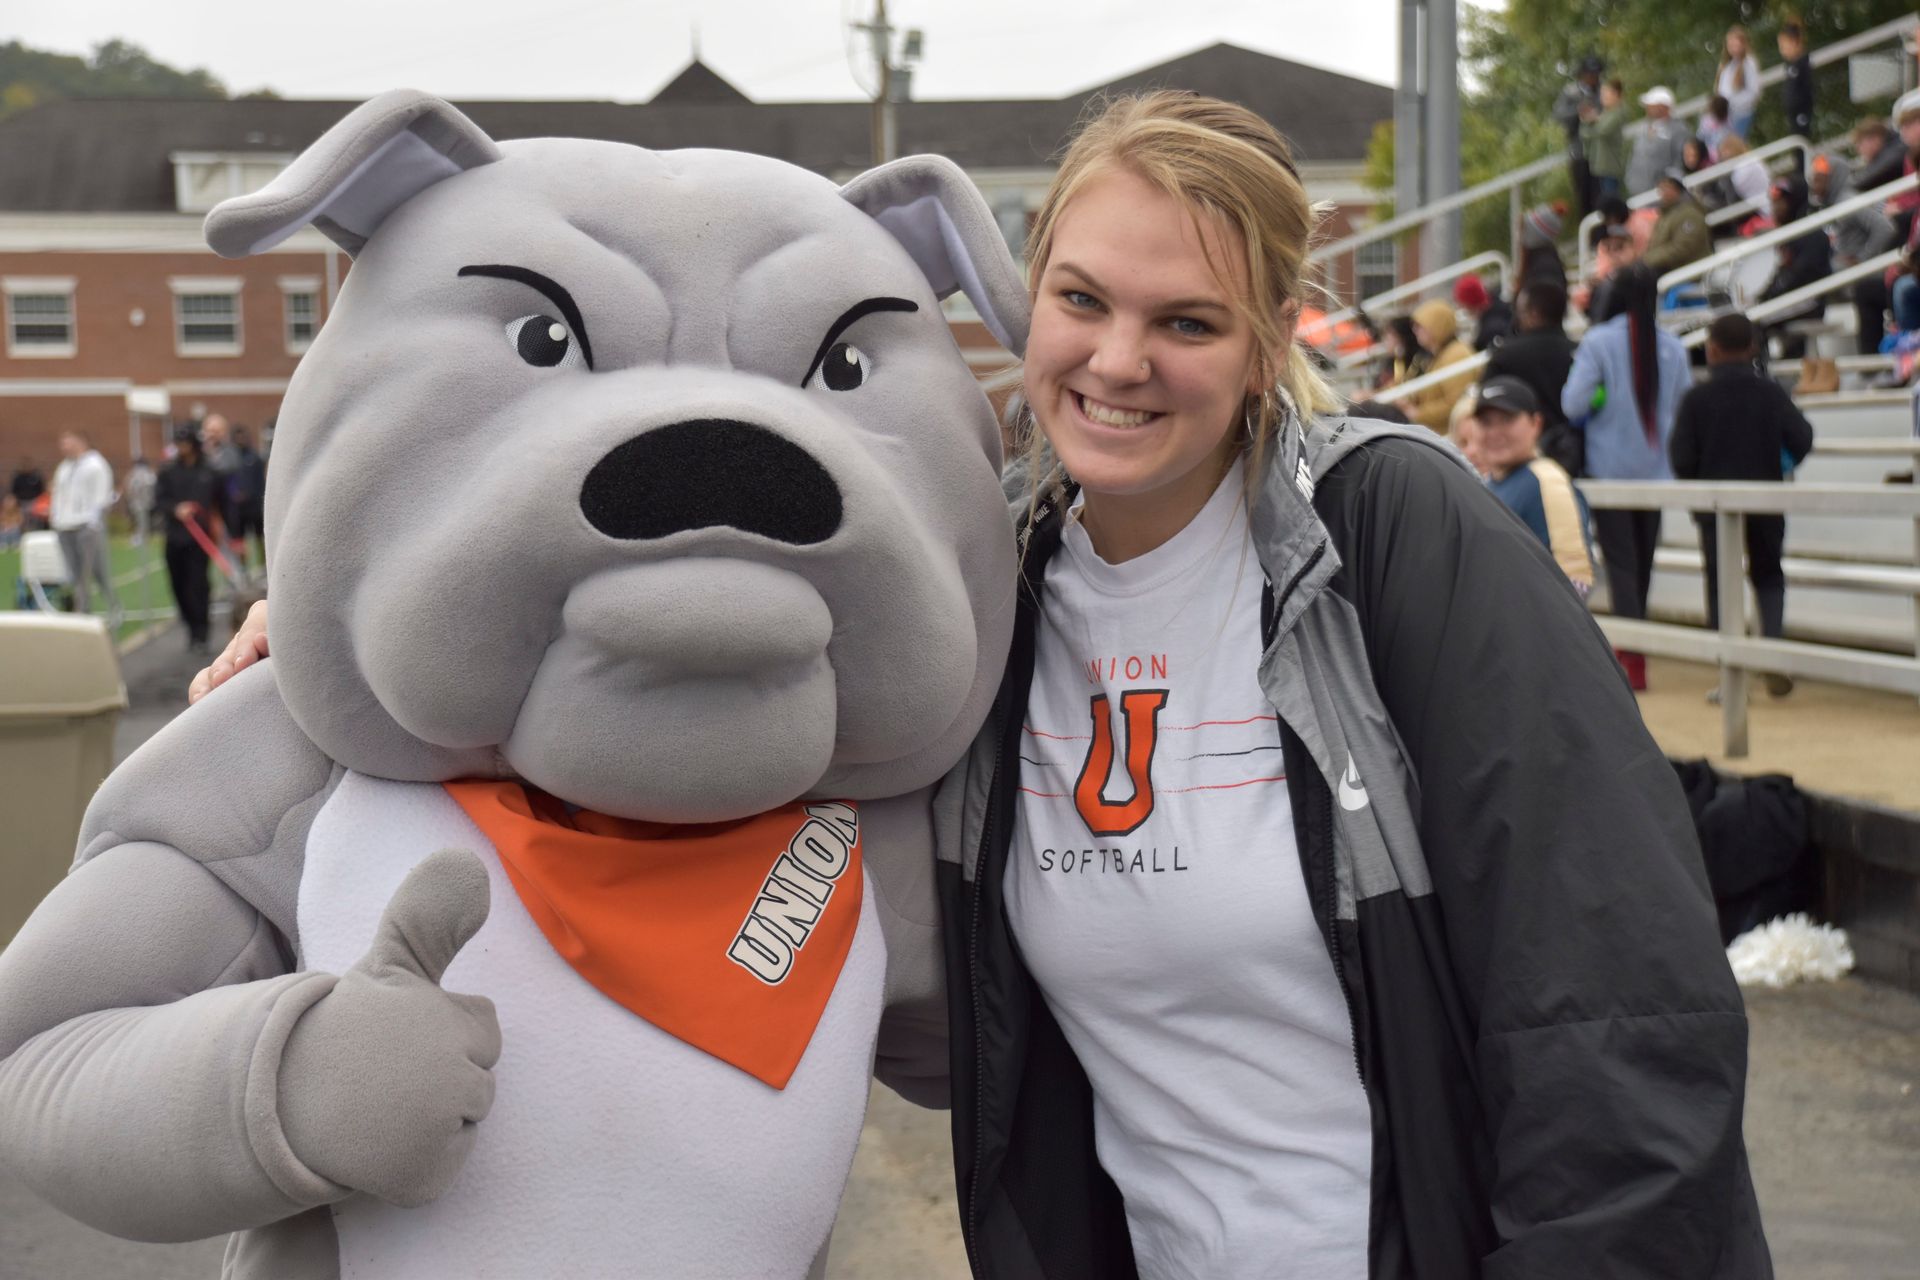 Allie posing with Union bulldog mascot